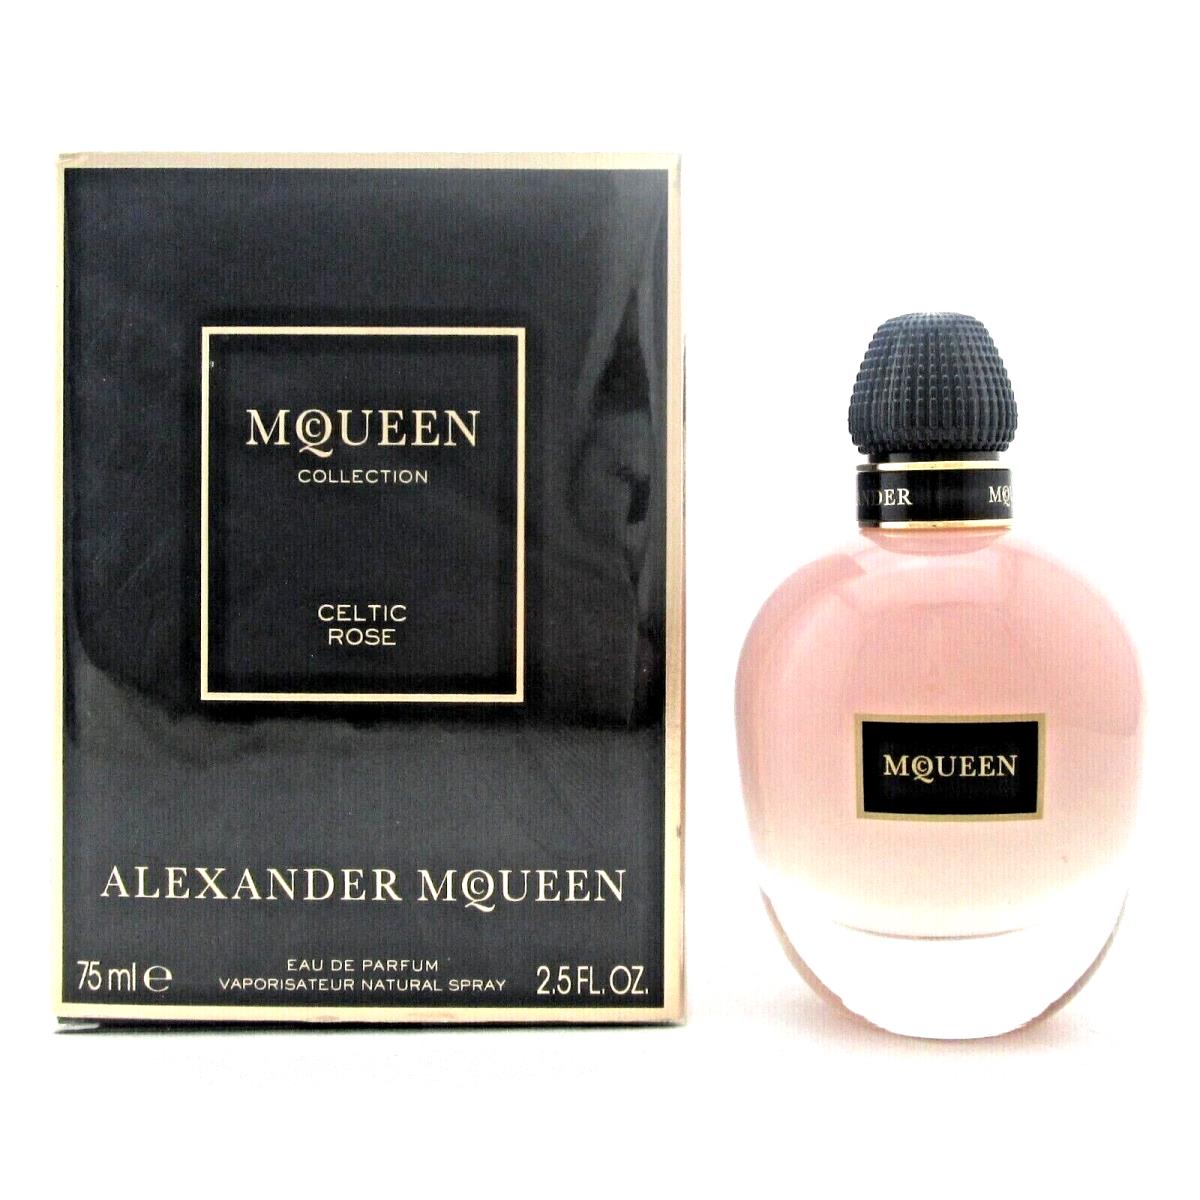 Mcqueen Collection Celtic Rose 2.5 Oz. Eau de Parfum Spray Women Box